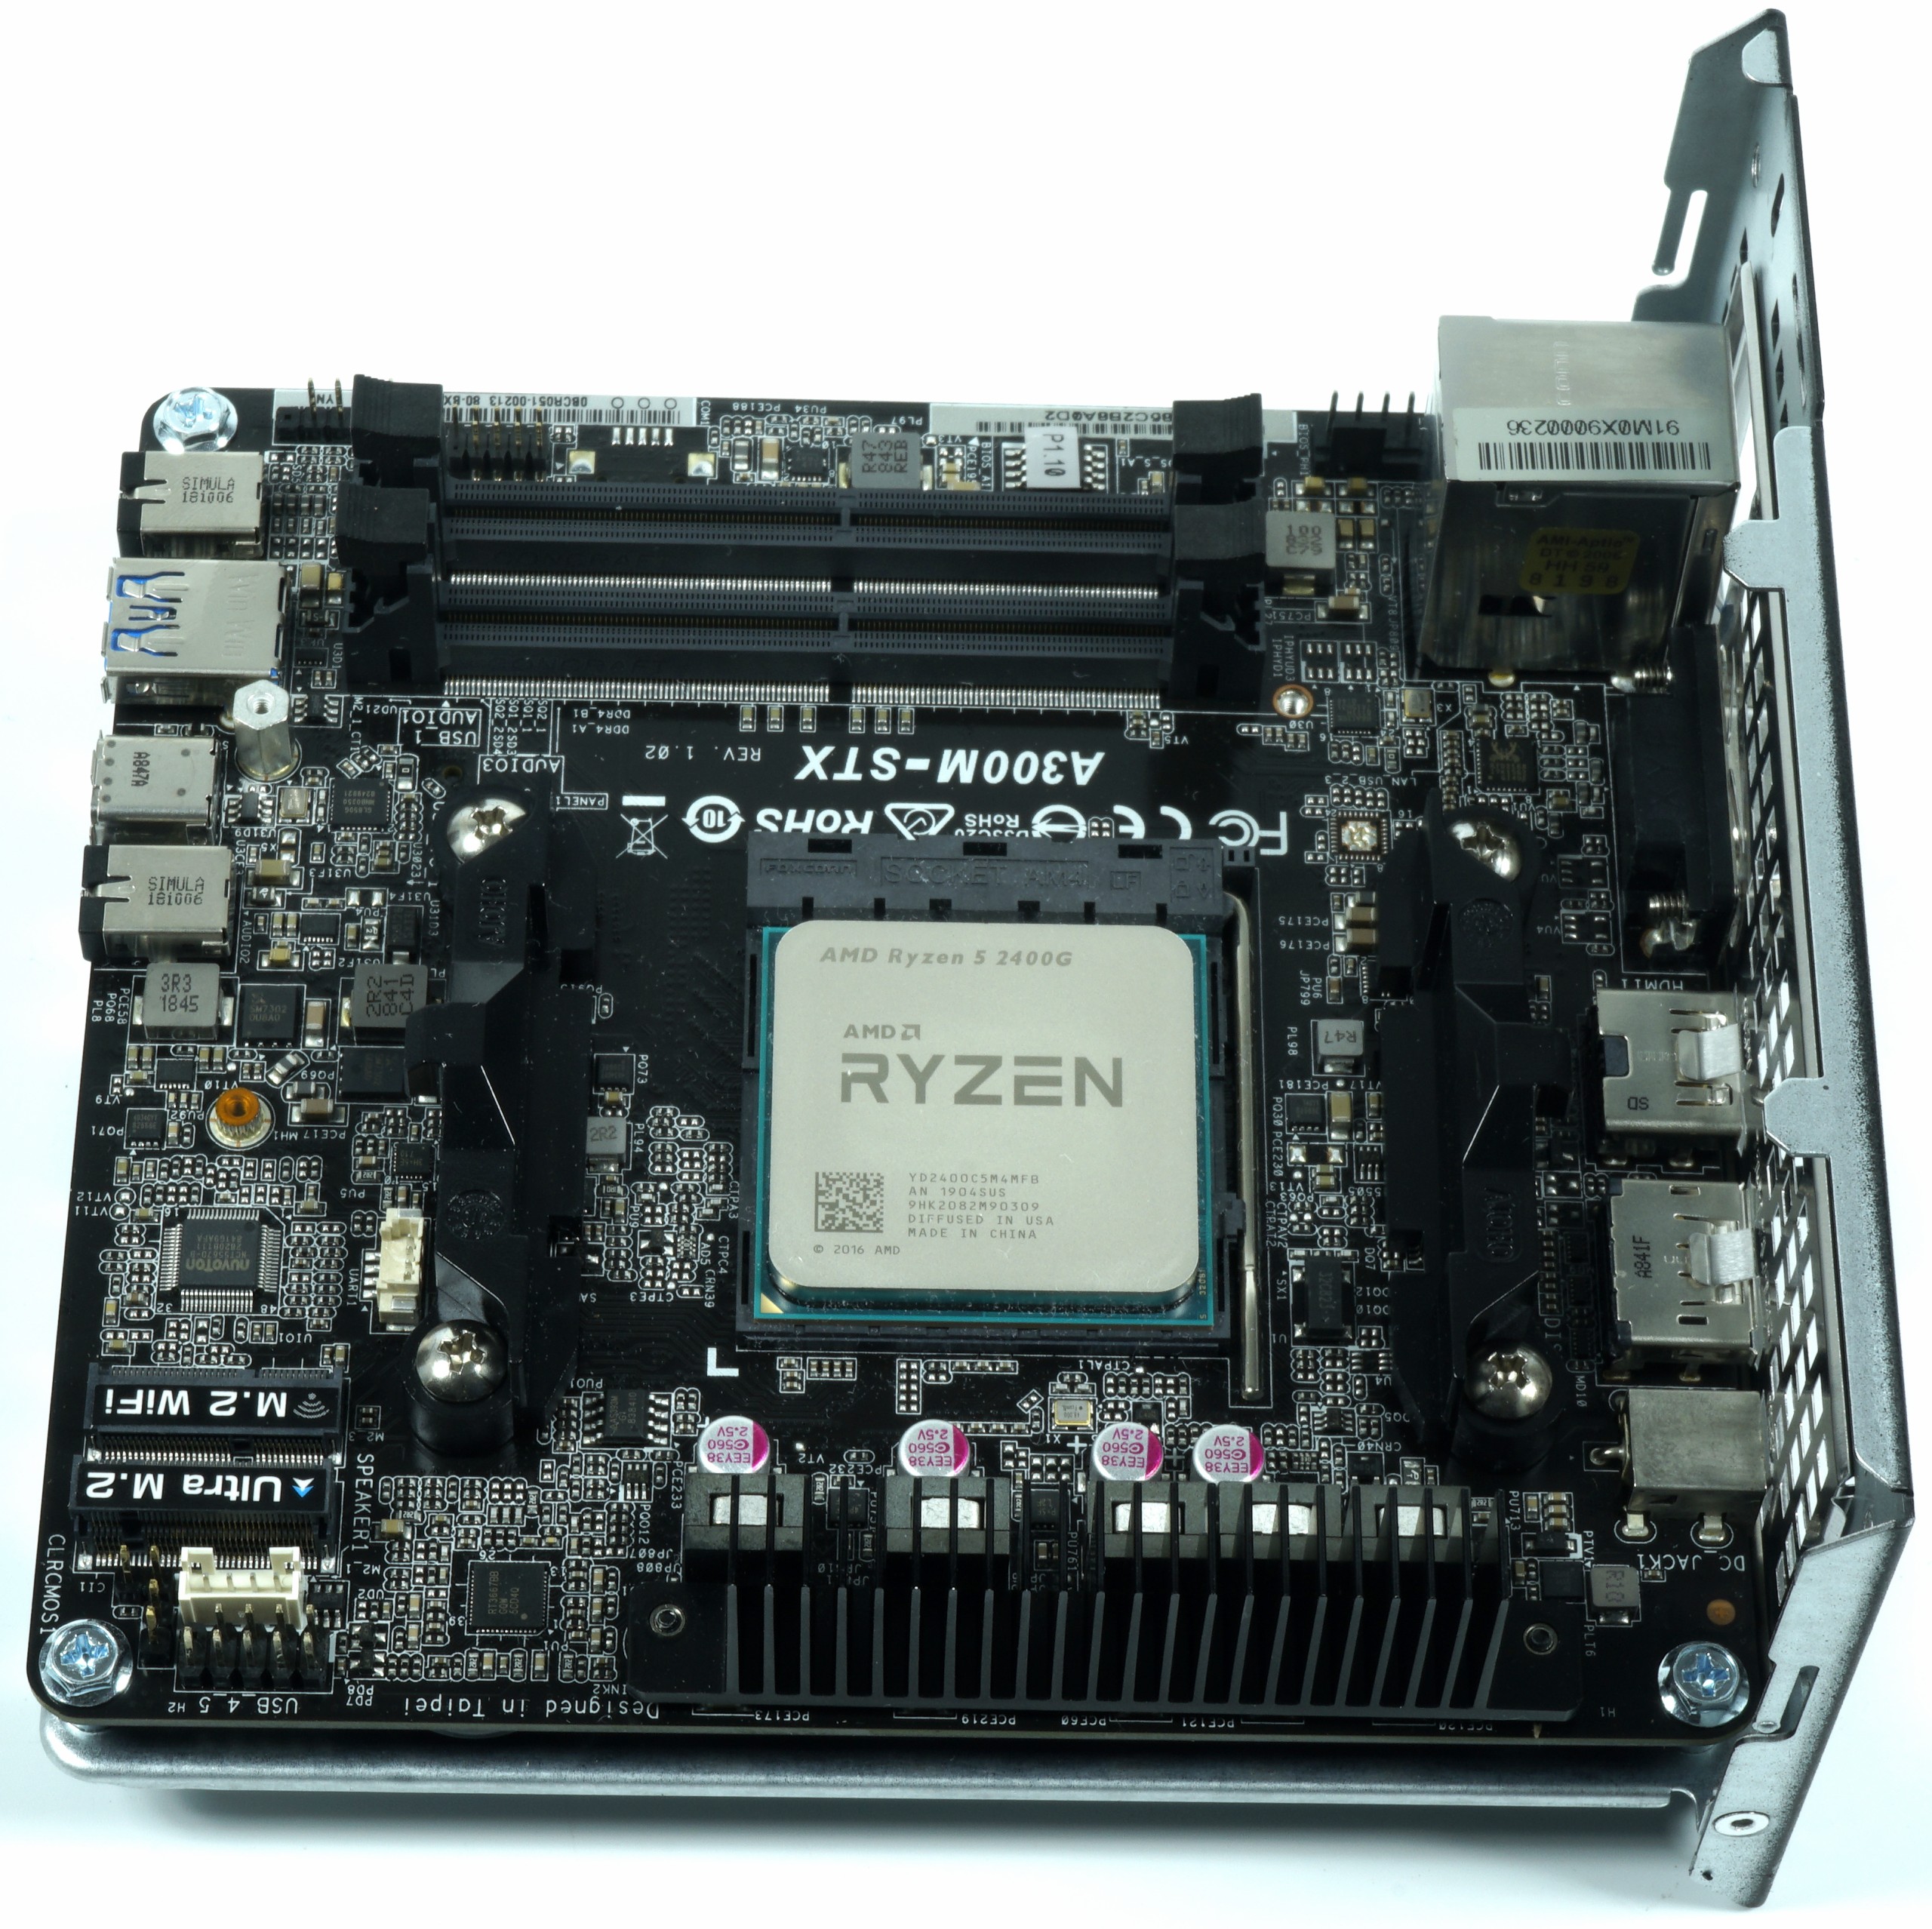 ASRock DeskMini A300 with the Ryzen 5 2400G APU from AMD in a 